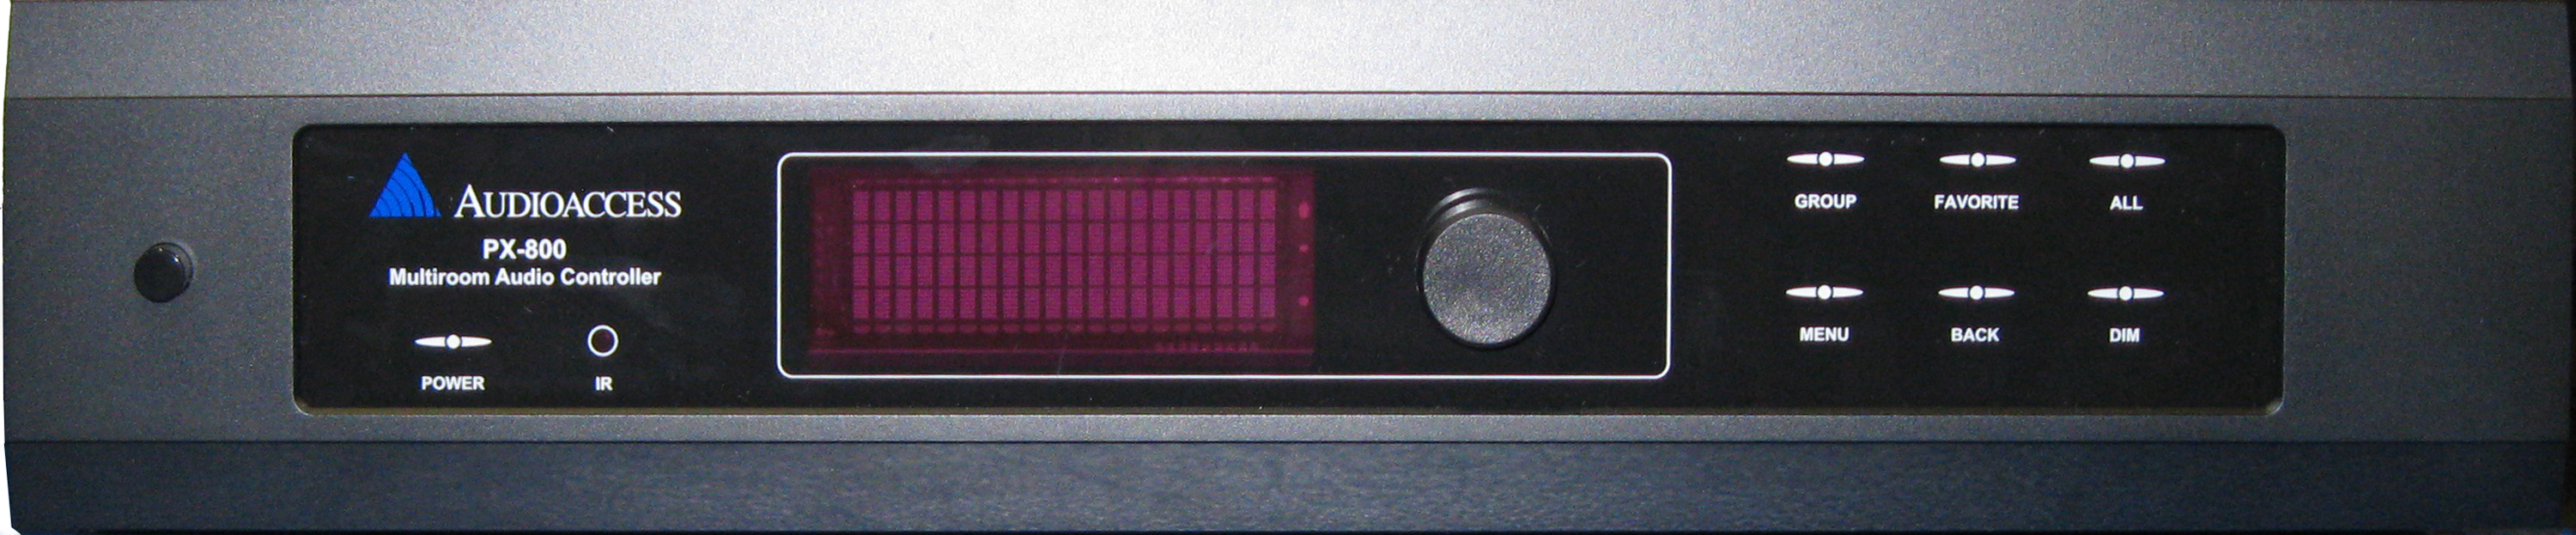 Audioaccess PX-800